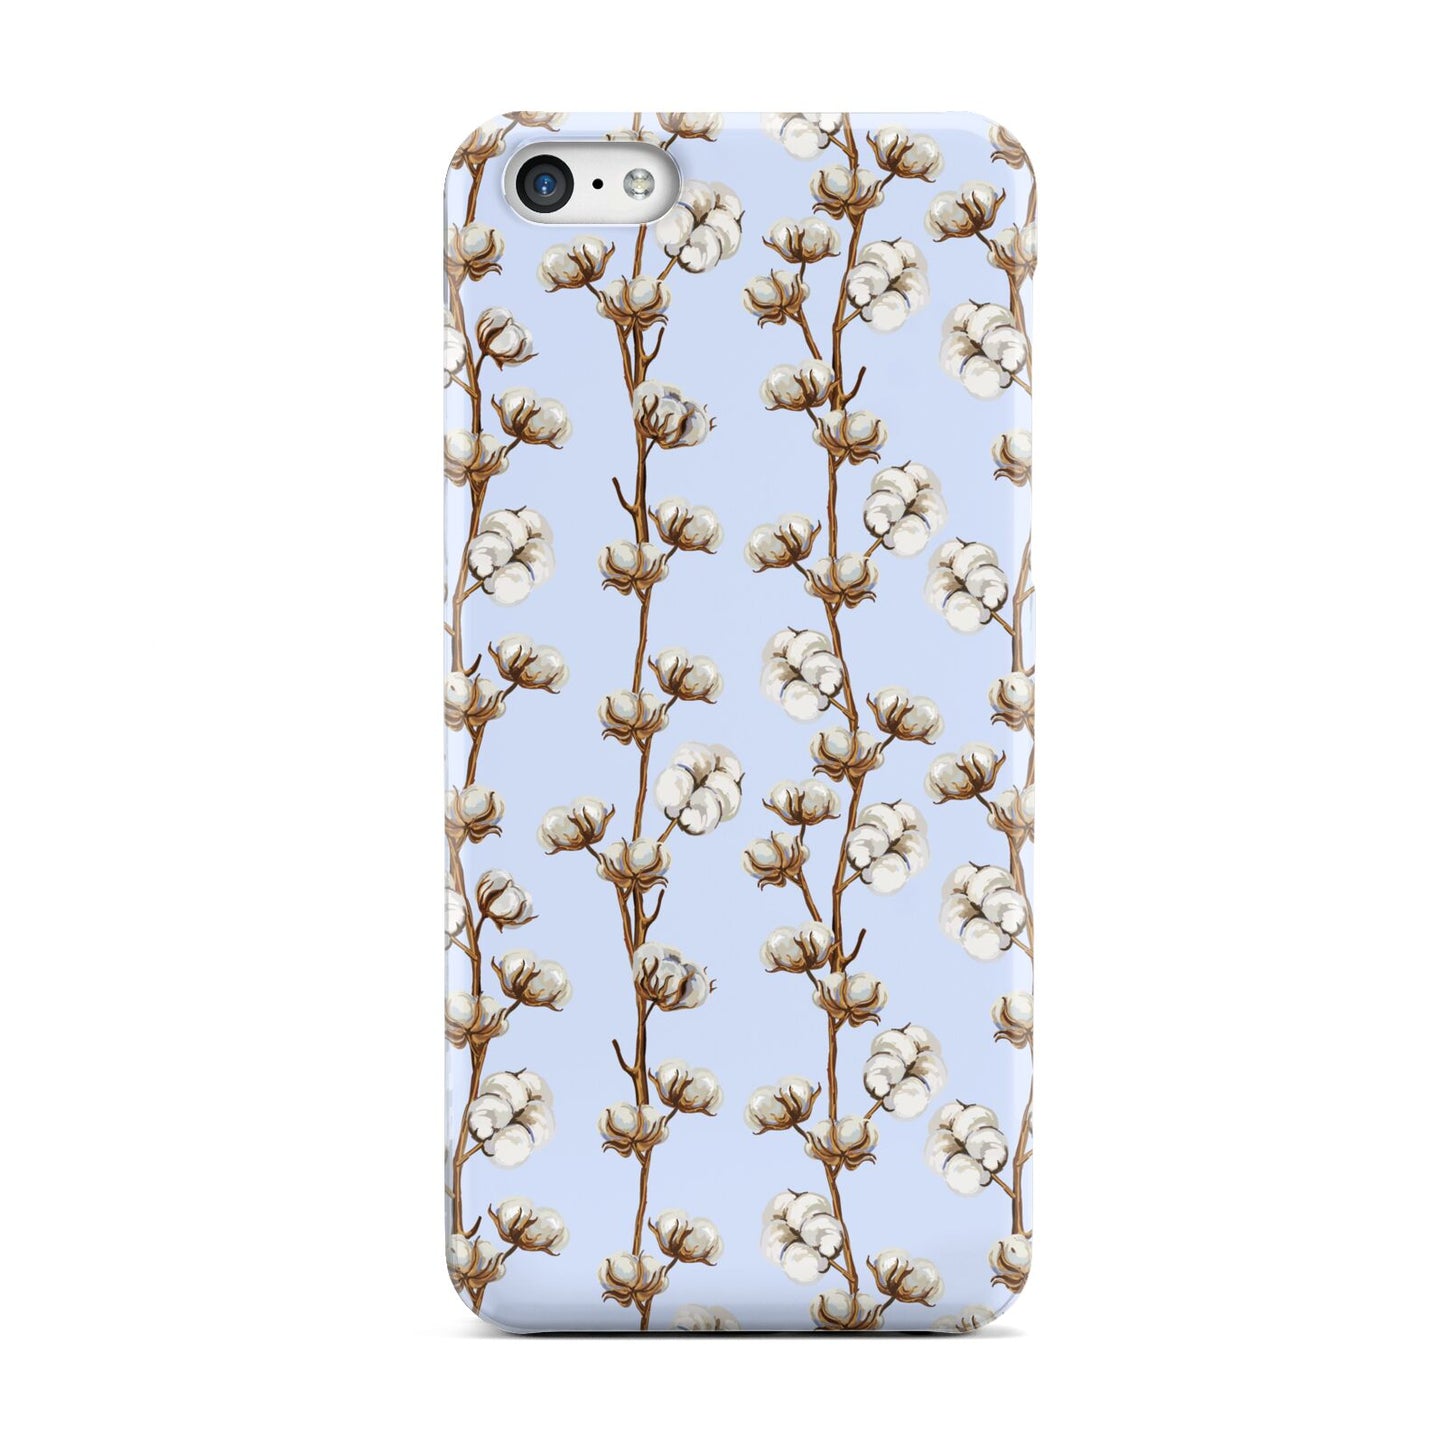 Cotton Branch Apple iPhone 5c Case